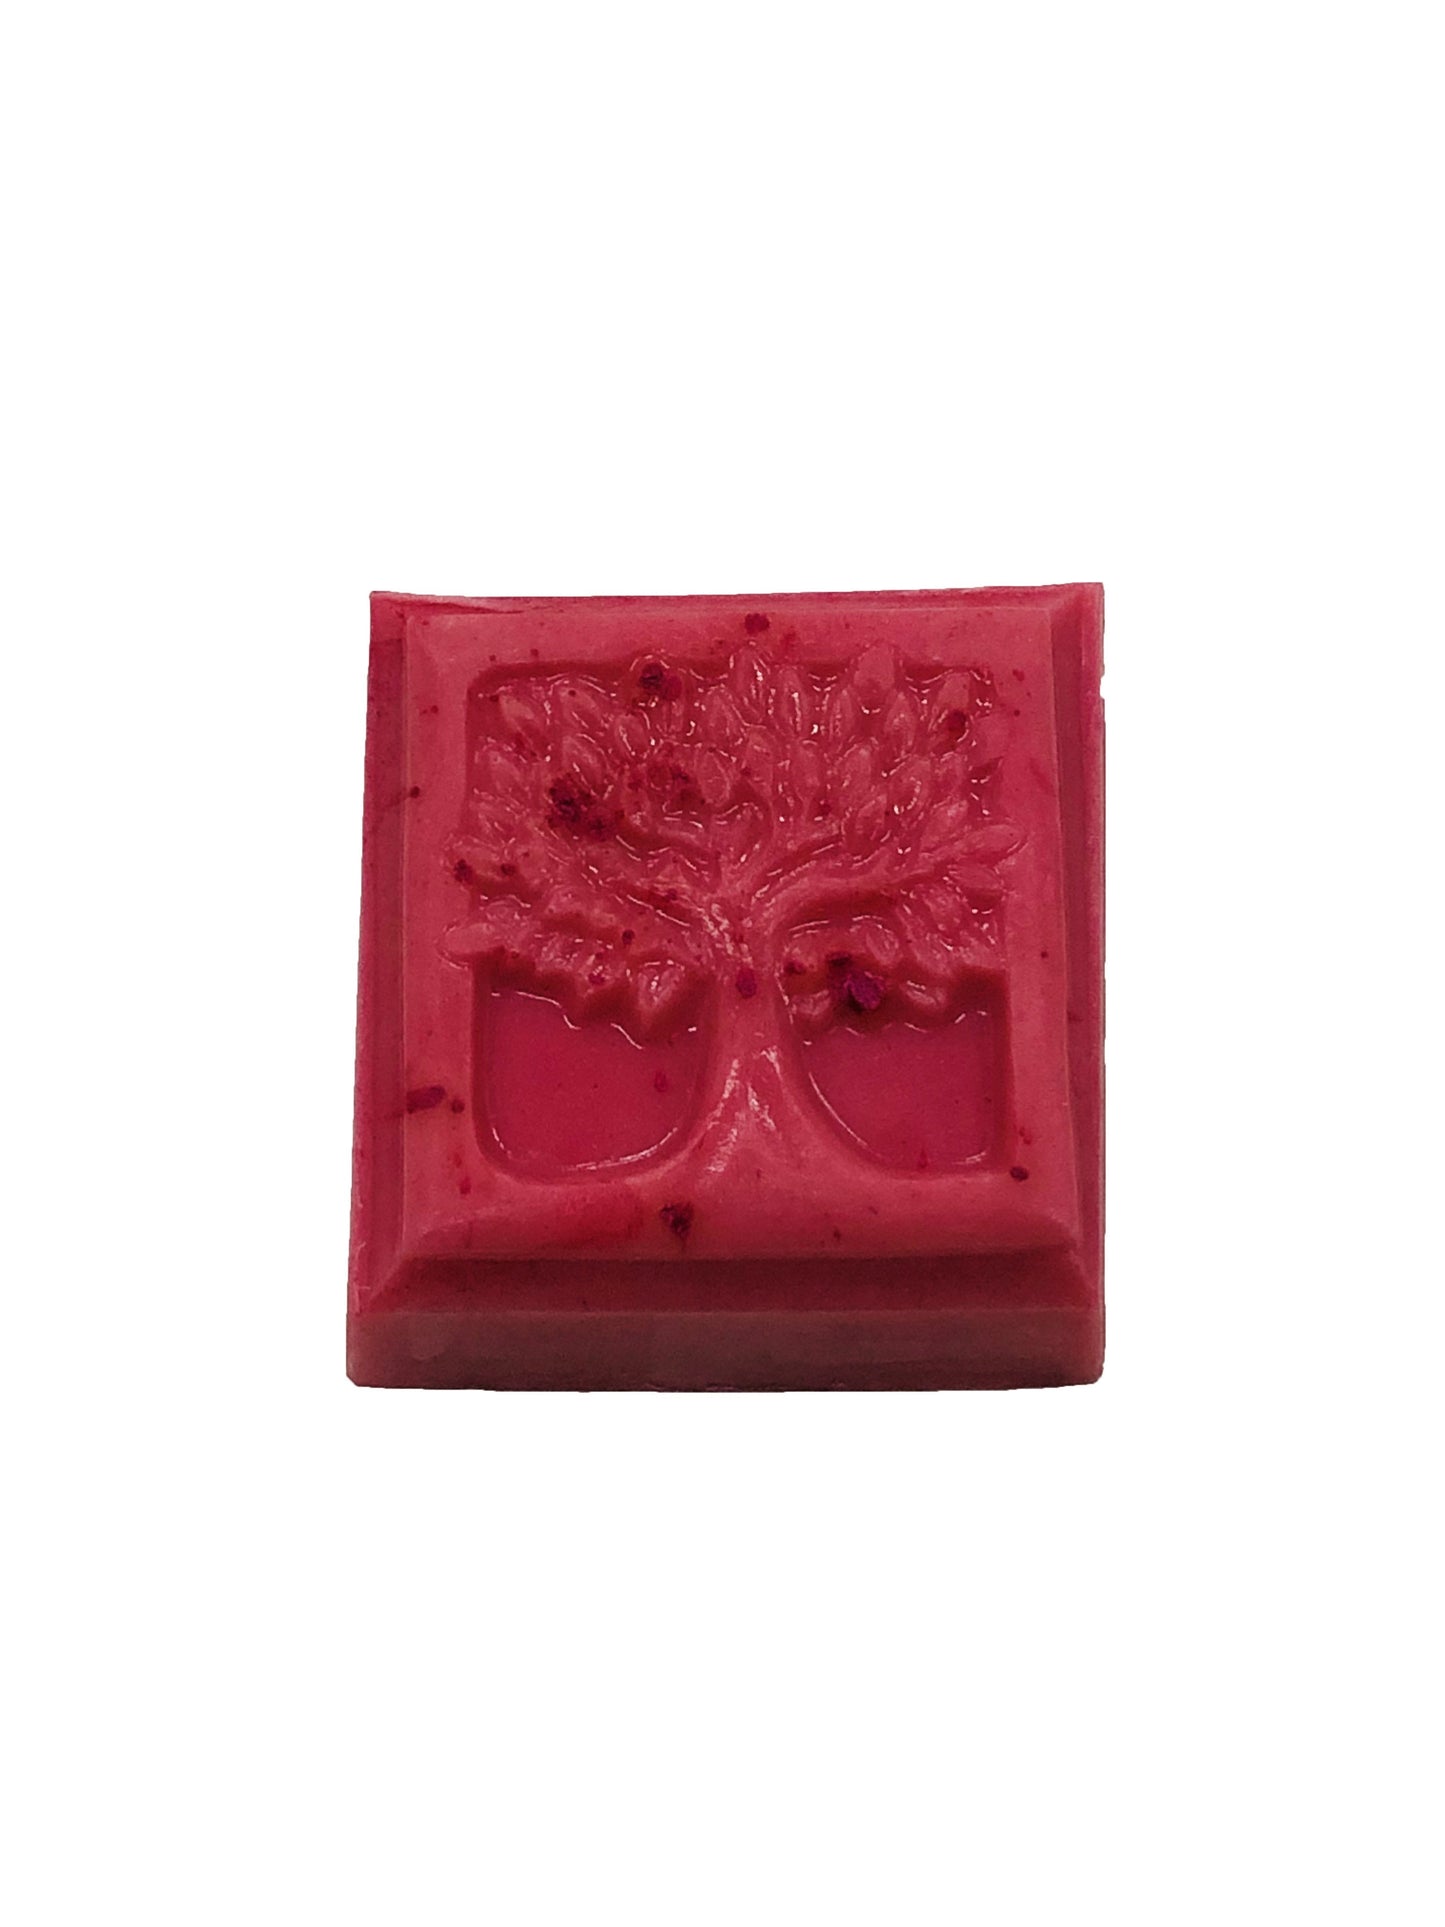 Isolate Sensual Soap (4 oz, 50 mg CBD)